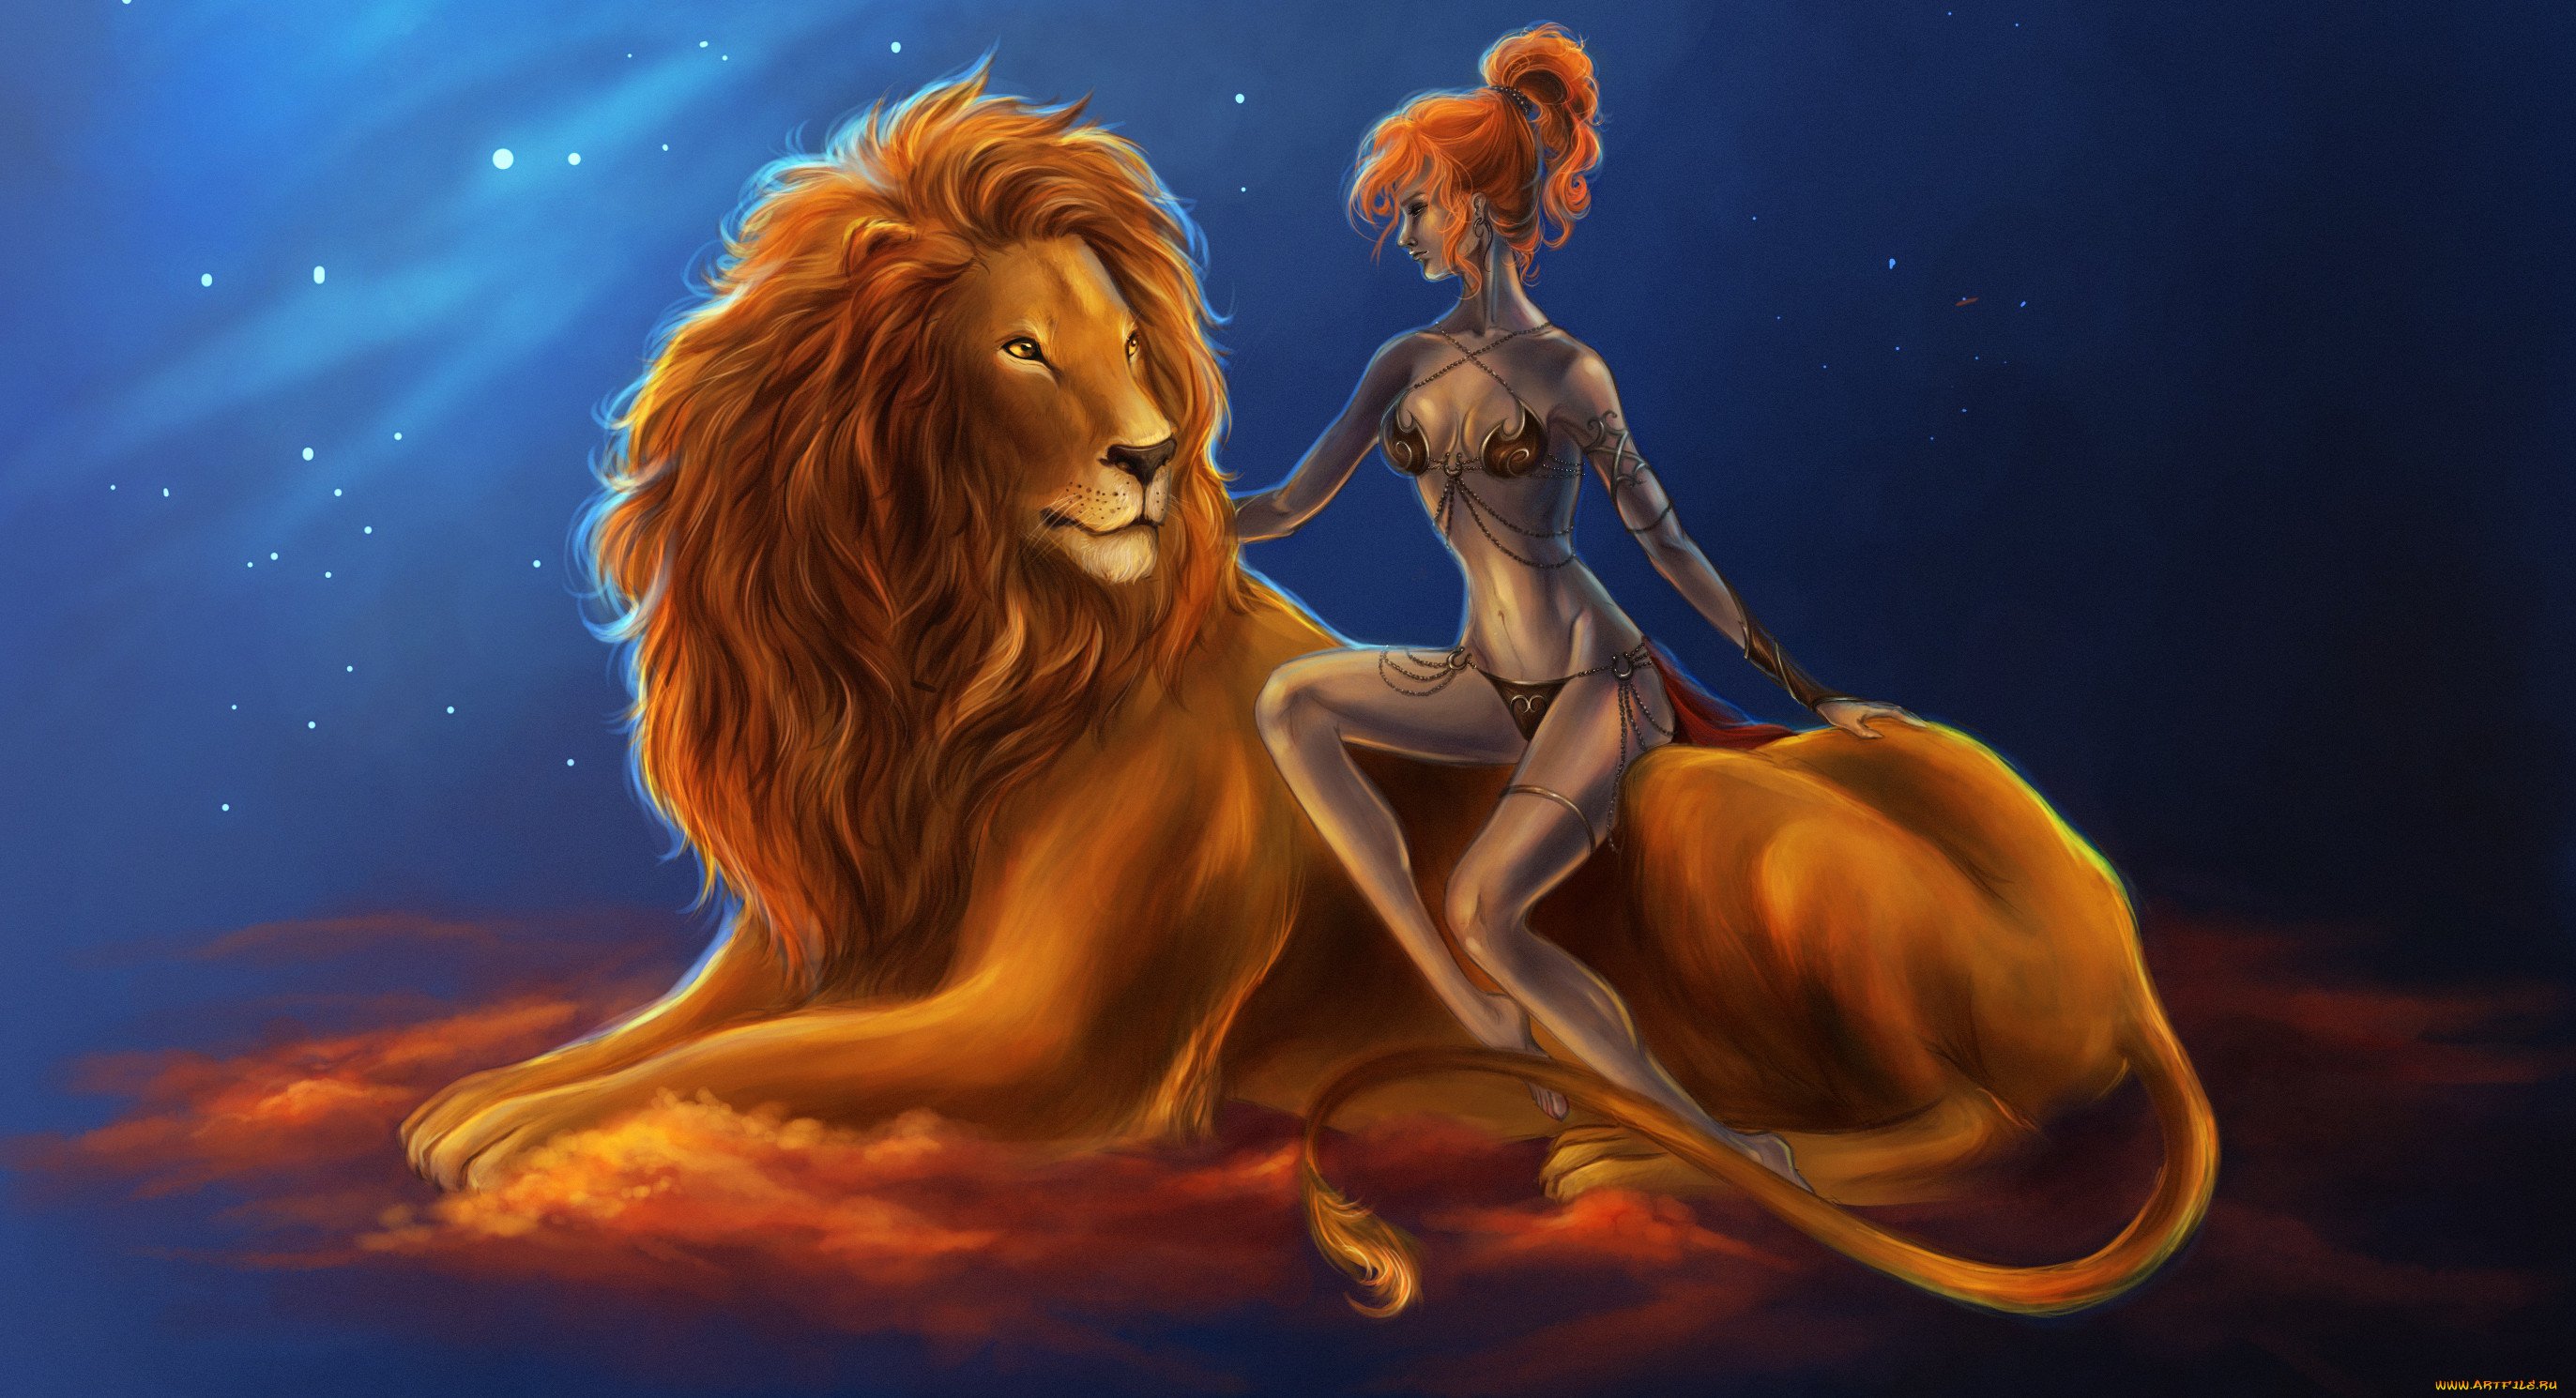 Картинка львица на голове у льва